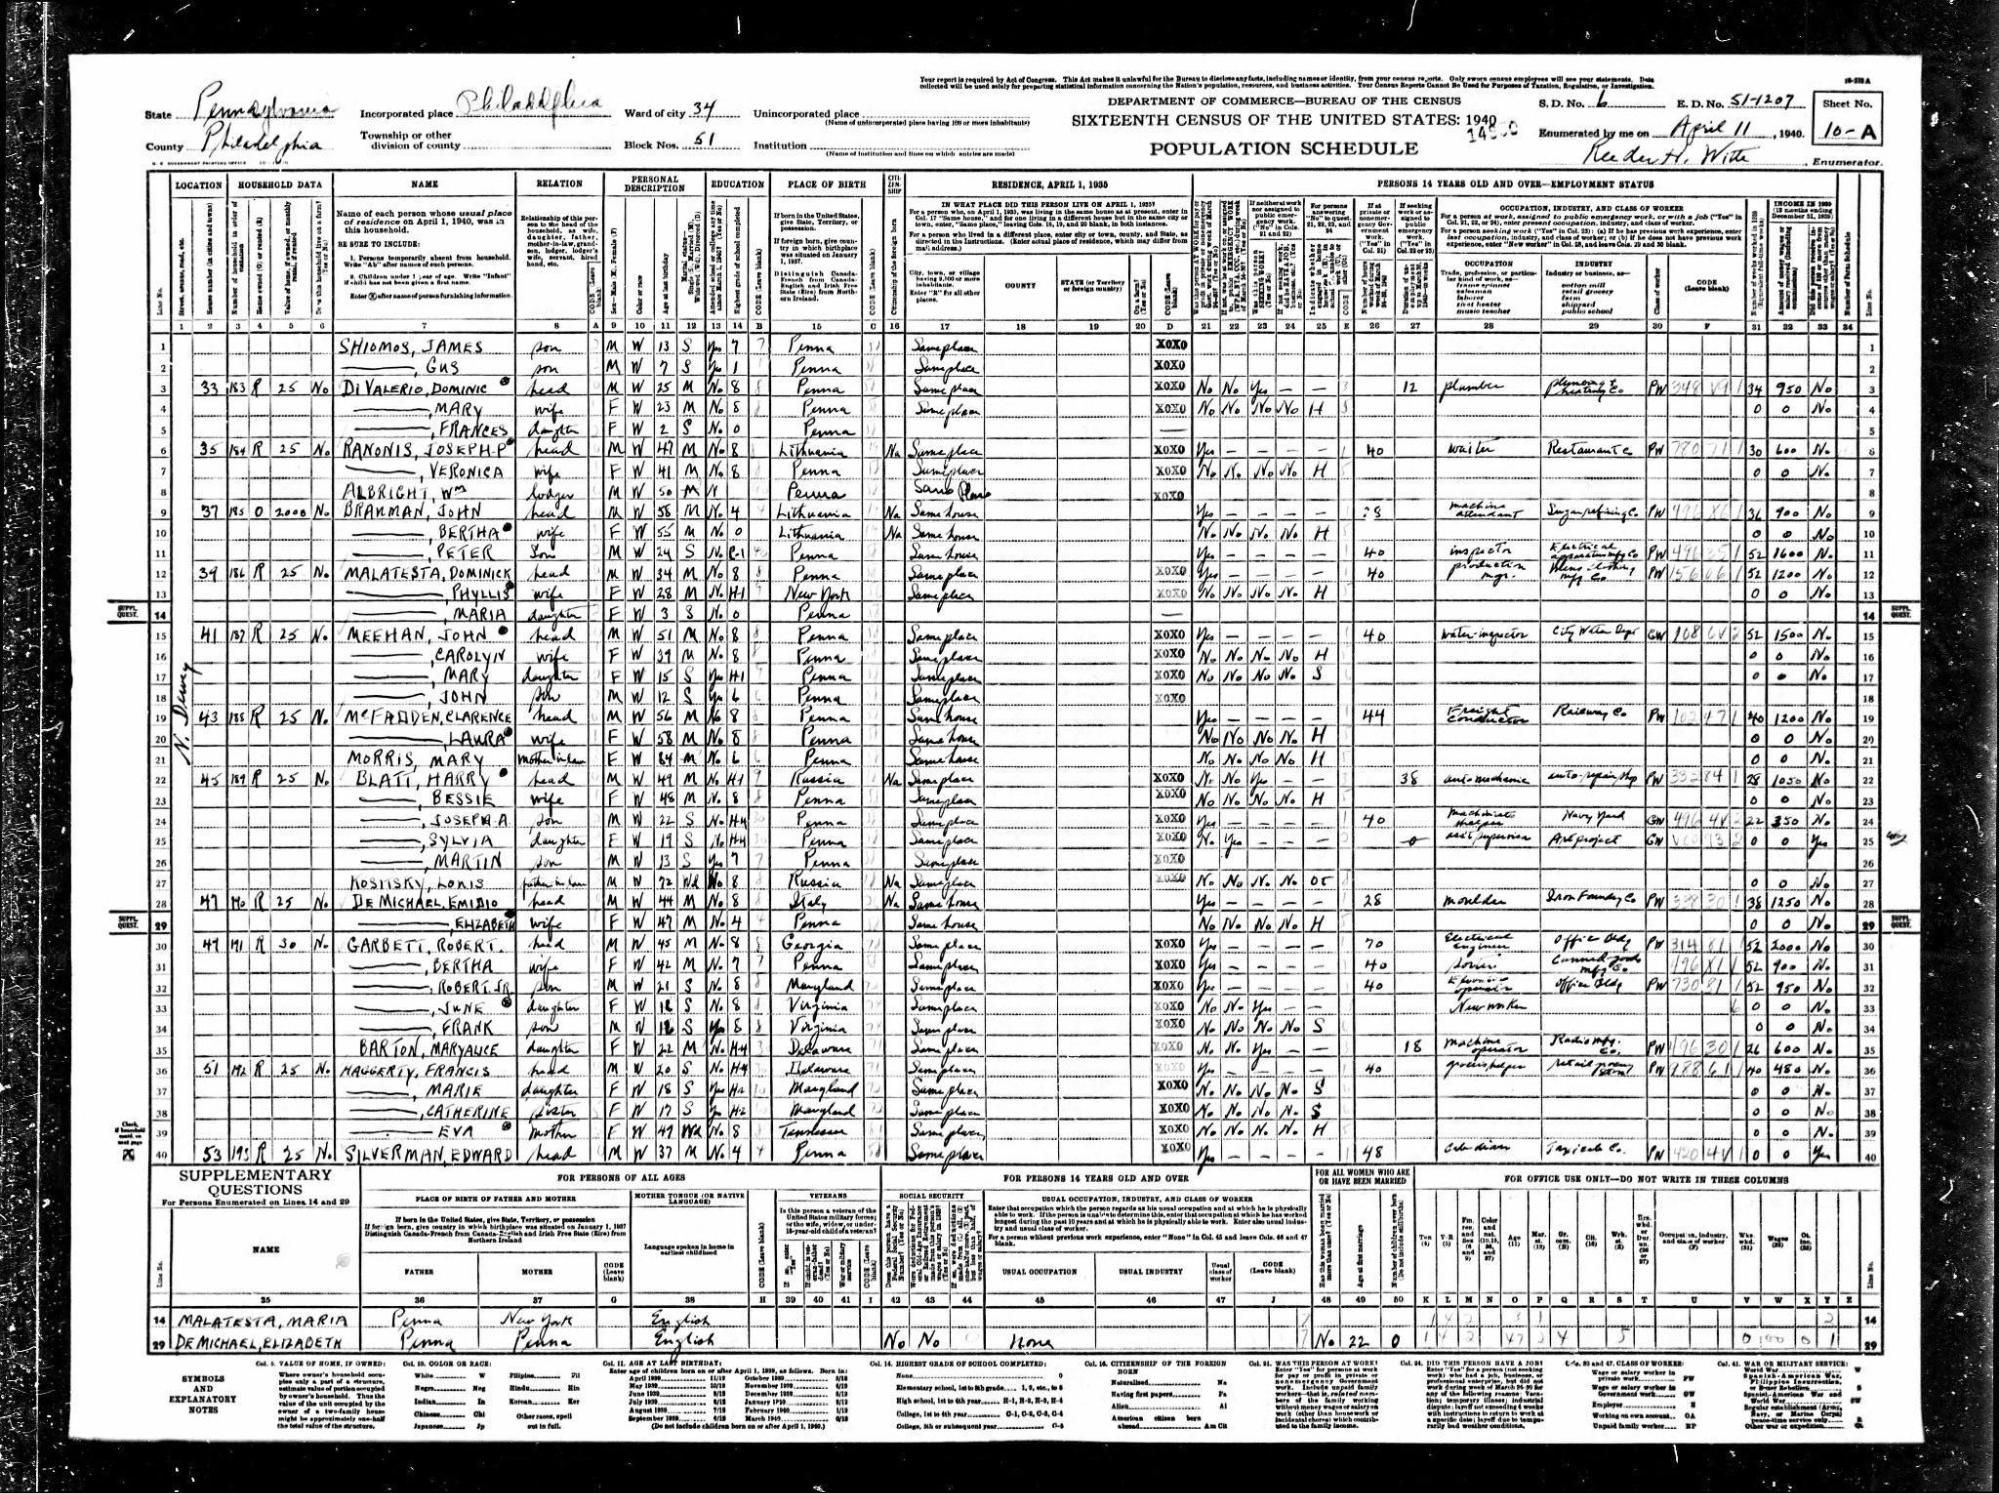 Robert Jr. (line 32) in the 1940 Census, Philadelphia